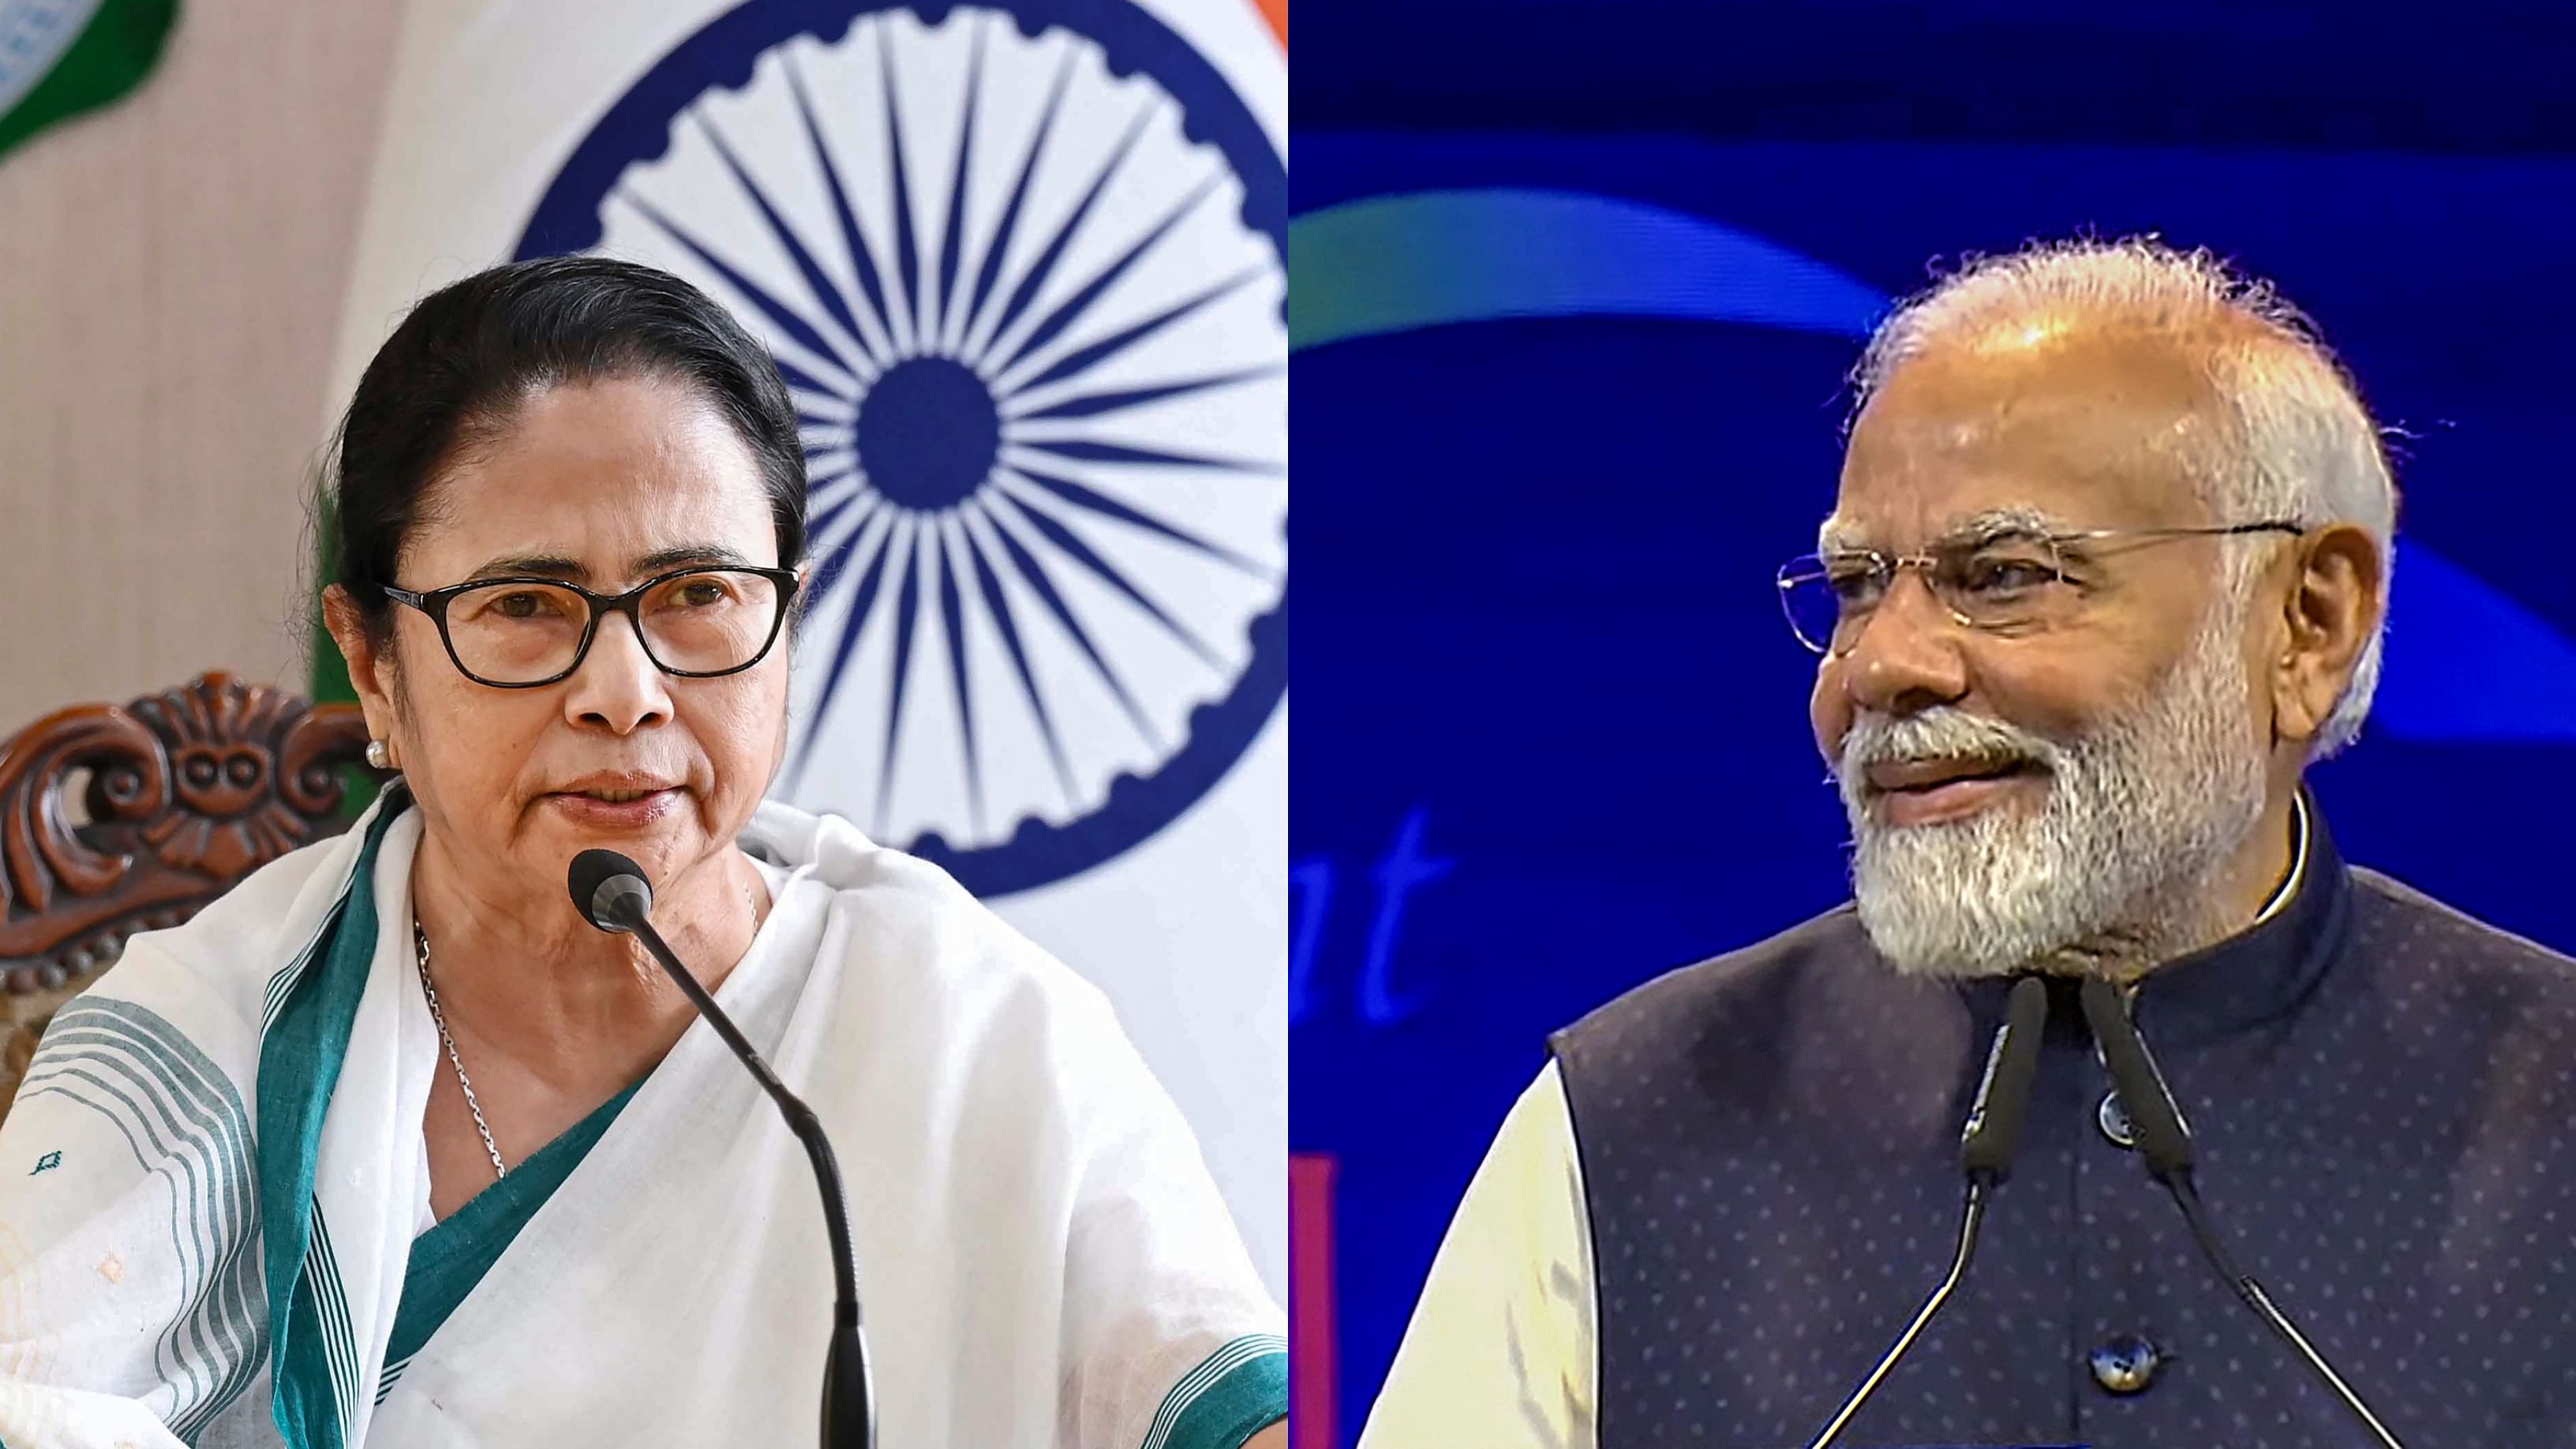 <div class="paragraphs"><p>West Bengal Chief Minister Mamata Banerjee (L) and Prime Minister Narendra Modi (R).&nbsp;</p></div>